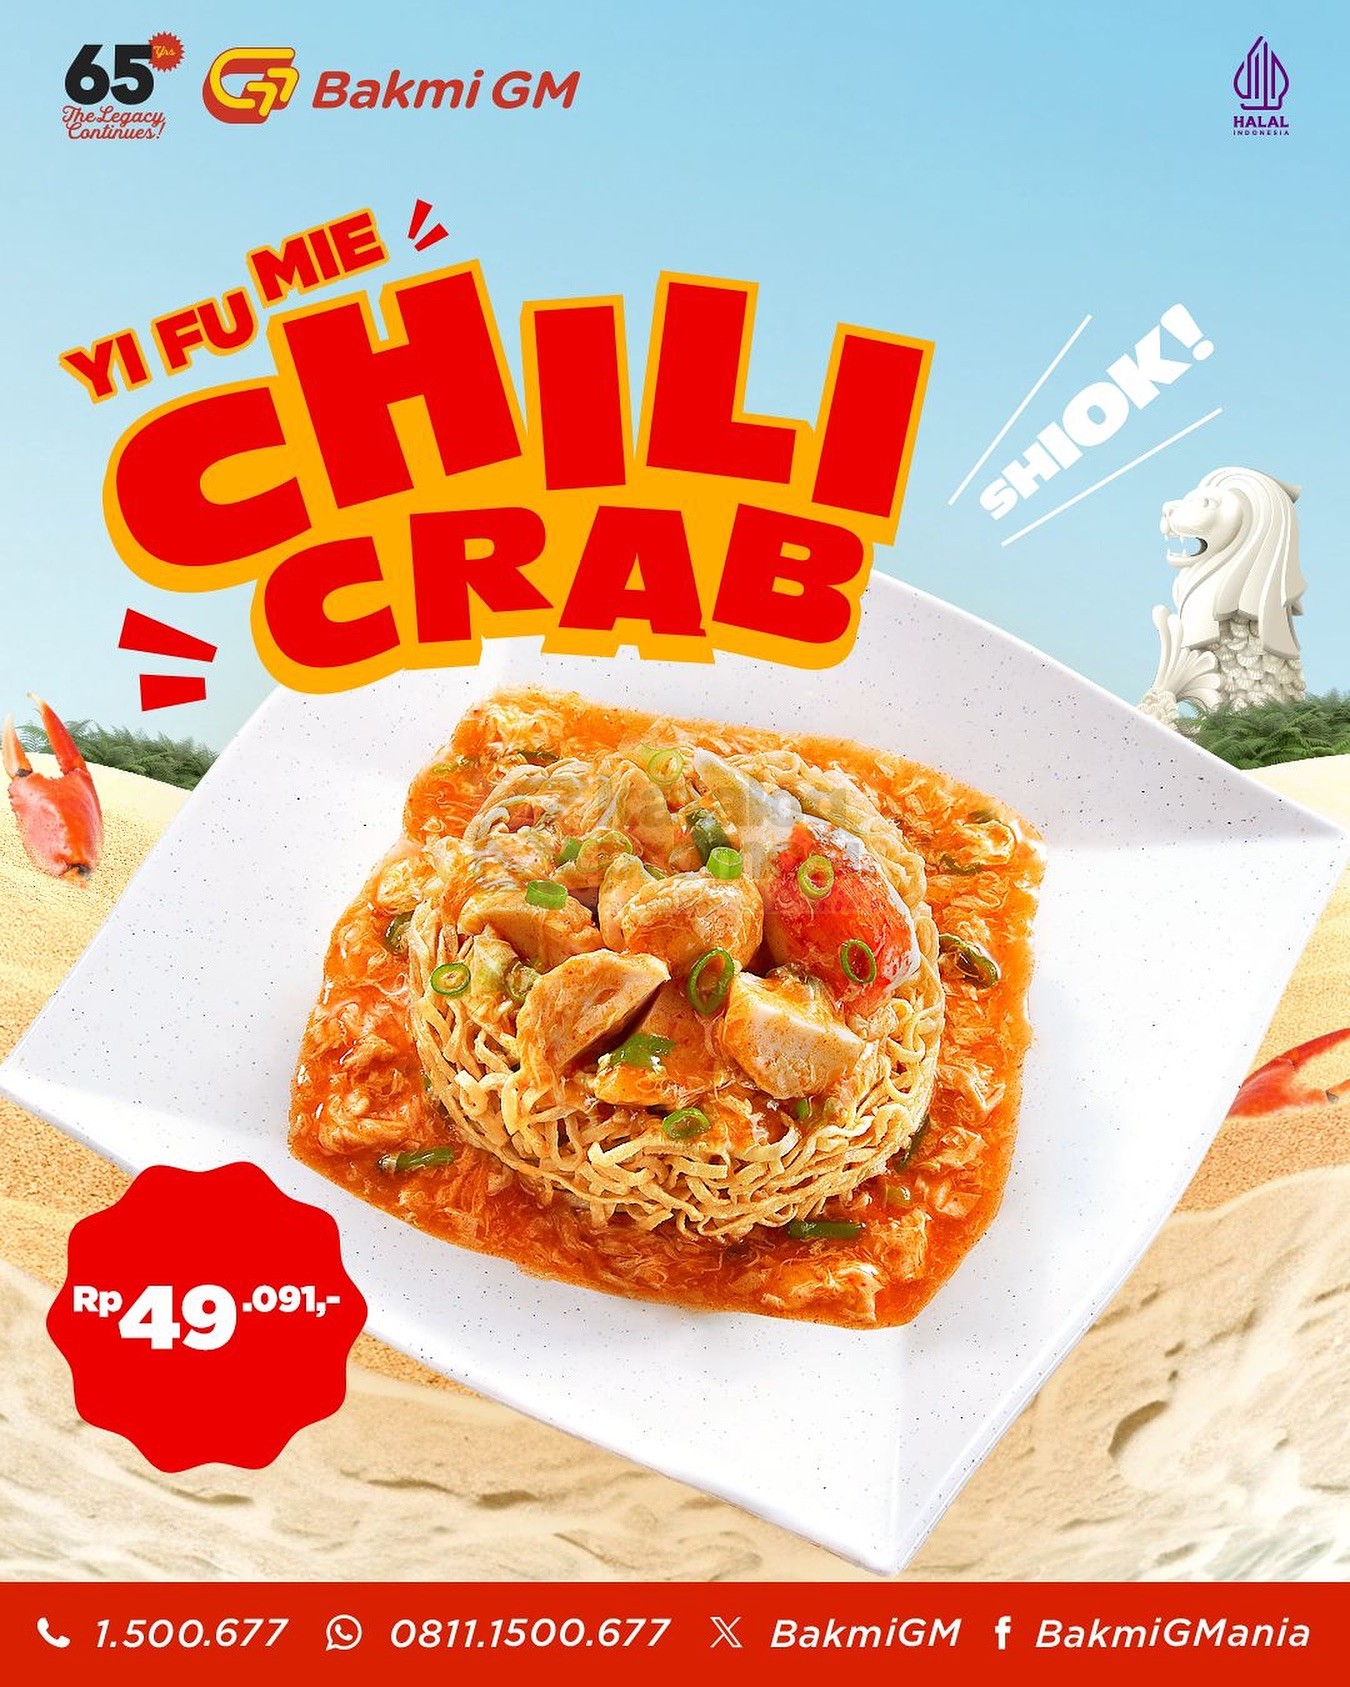 PROMO BAKMI GM MENU BARU! Yi Fu Mie Chili Crab HARGA SPESIAL cuma Rp. 49.091